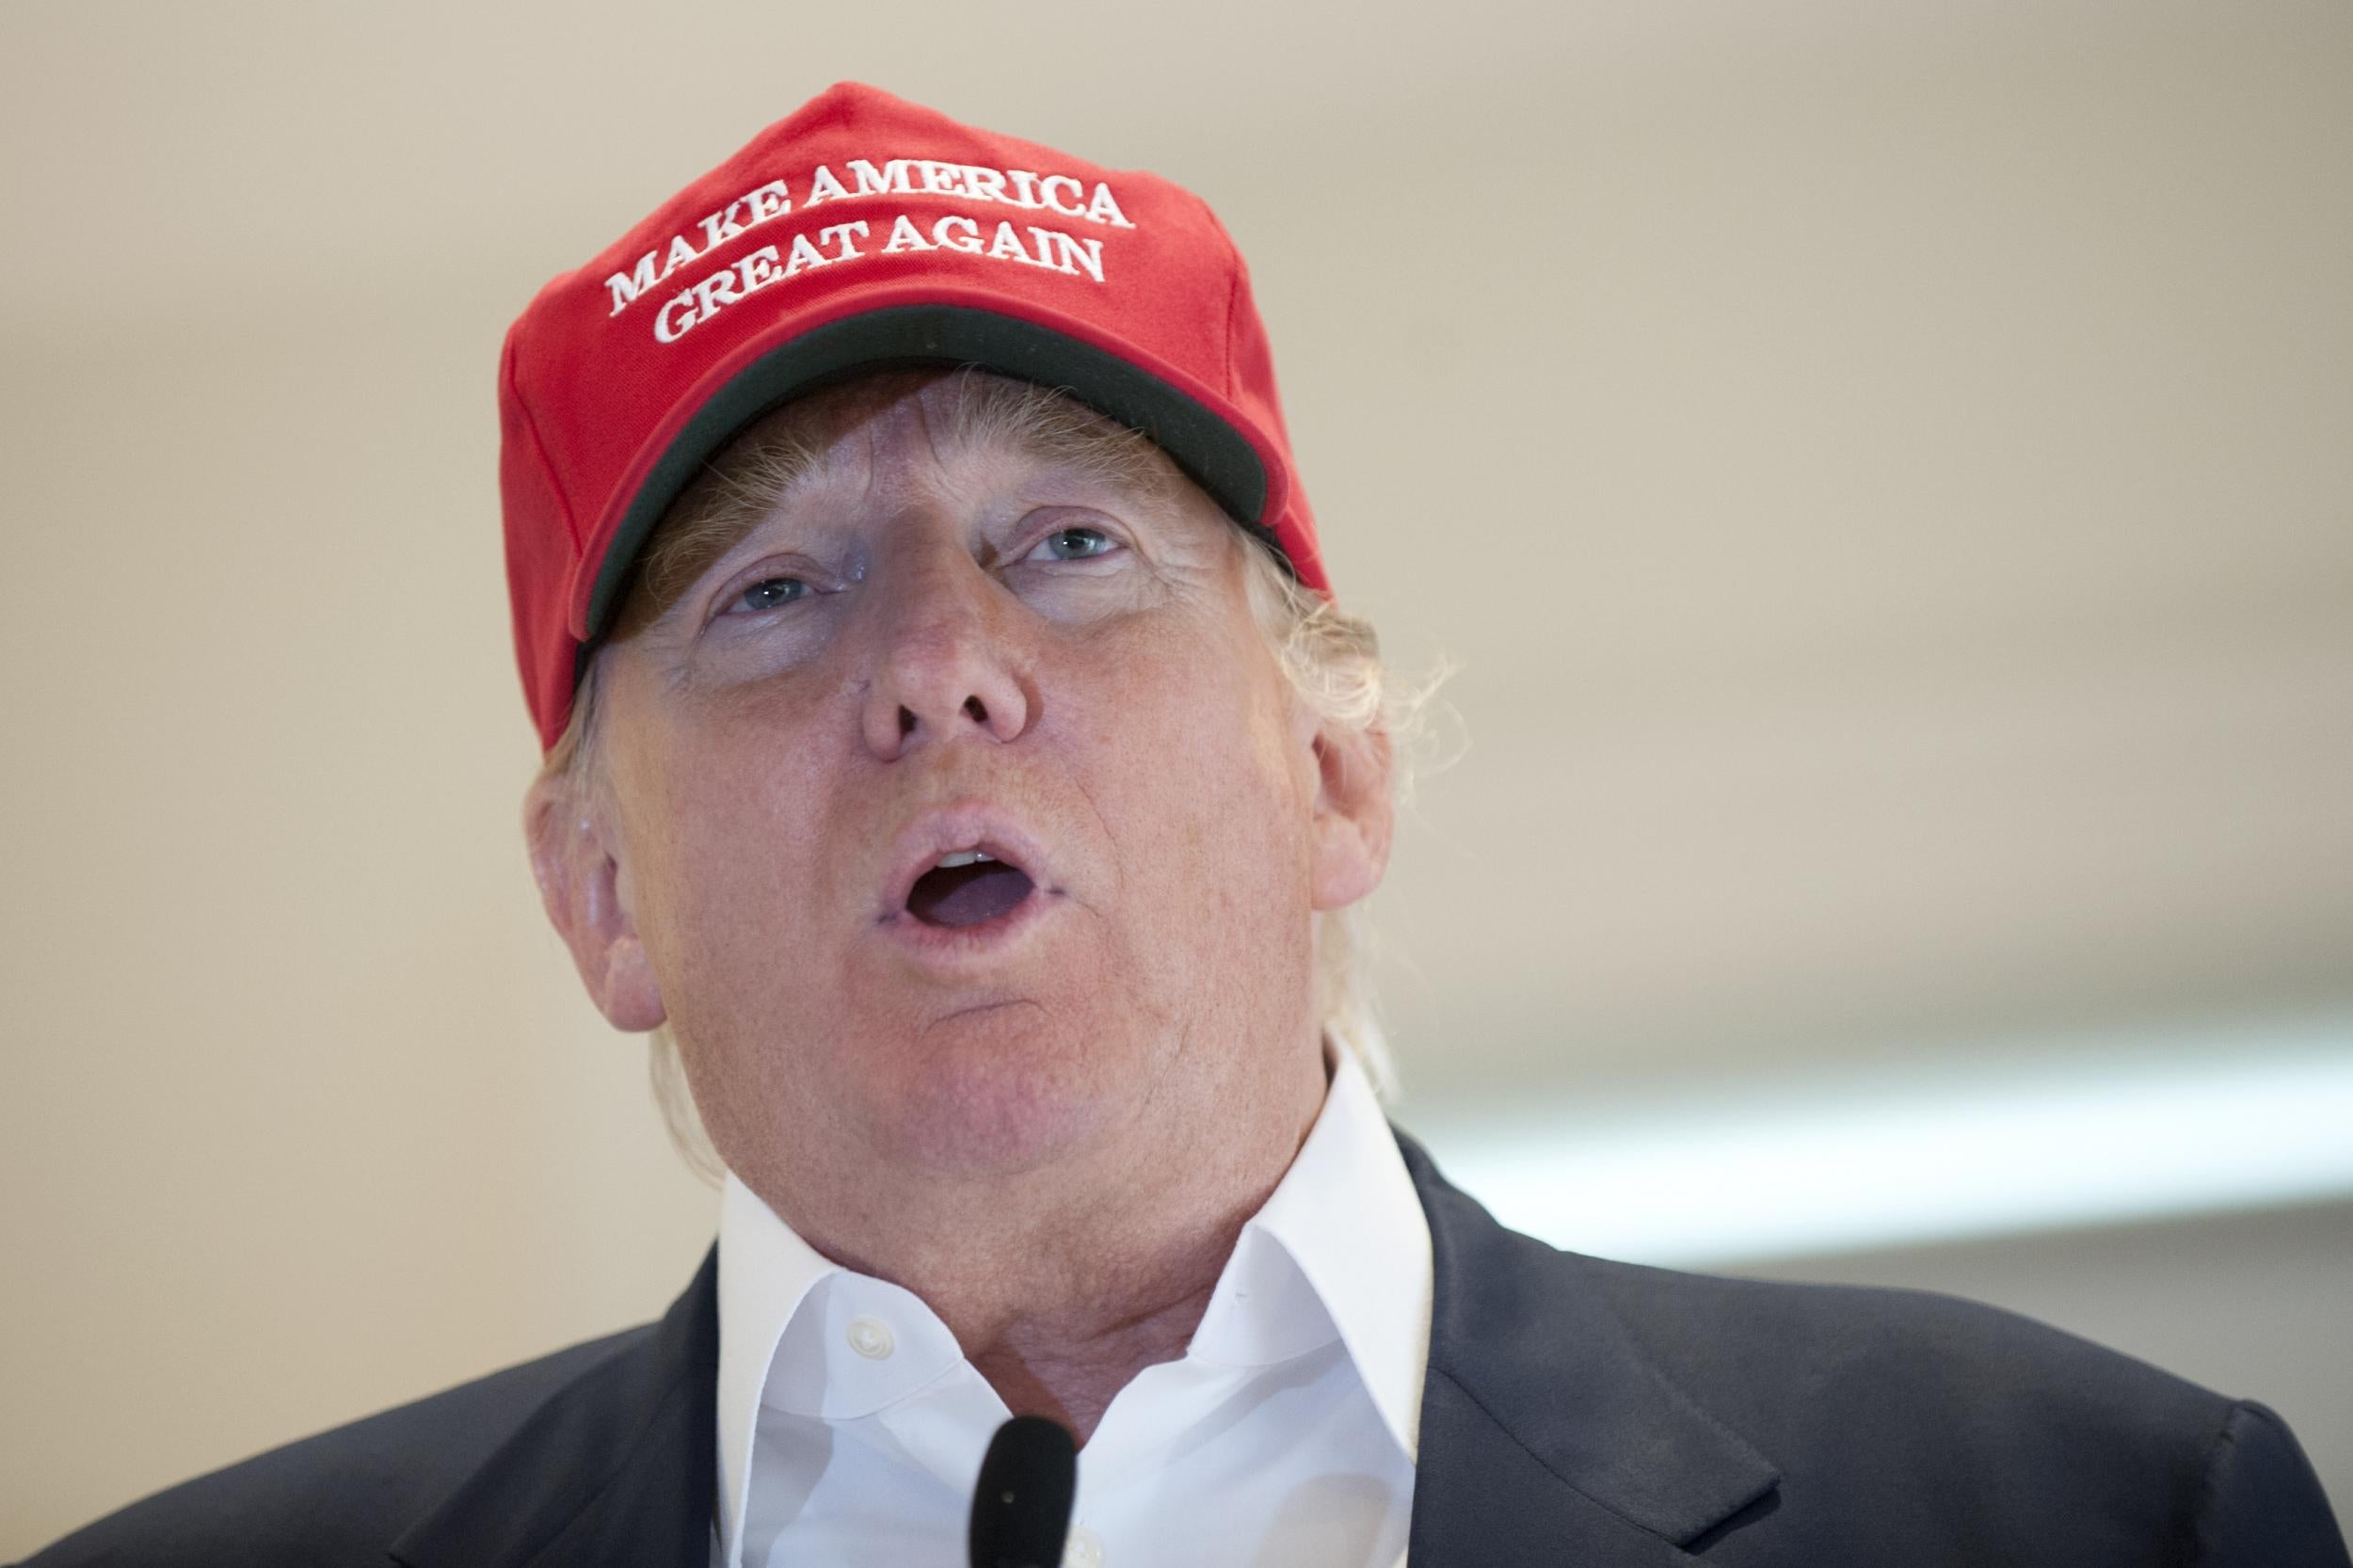 Republican presidential front-runner Donald Trump